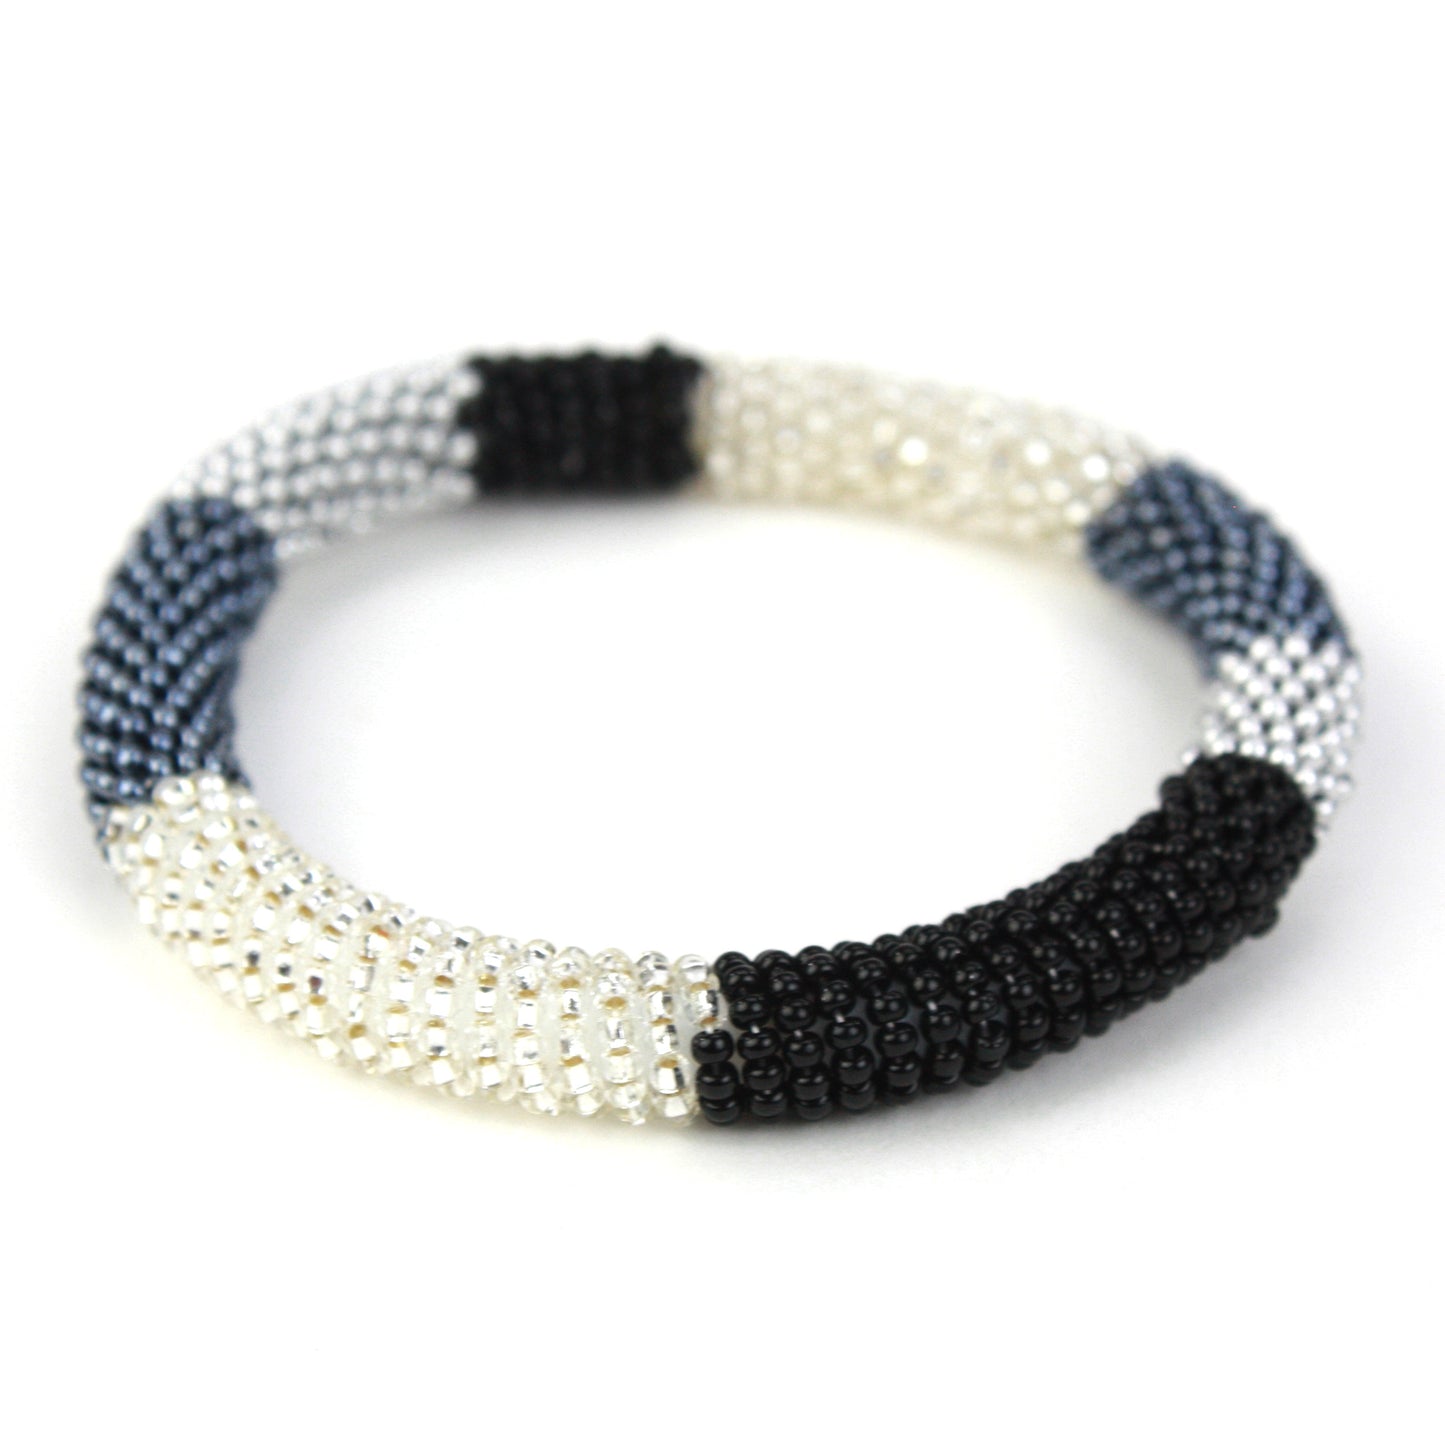 Beaded bracelet - Black, white, steel and silver